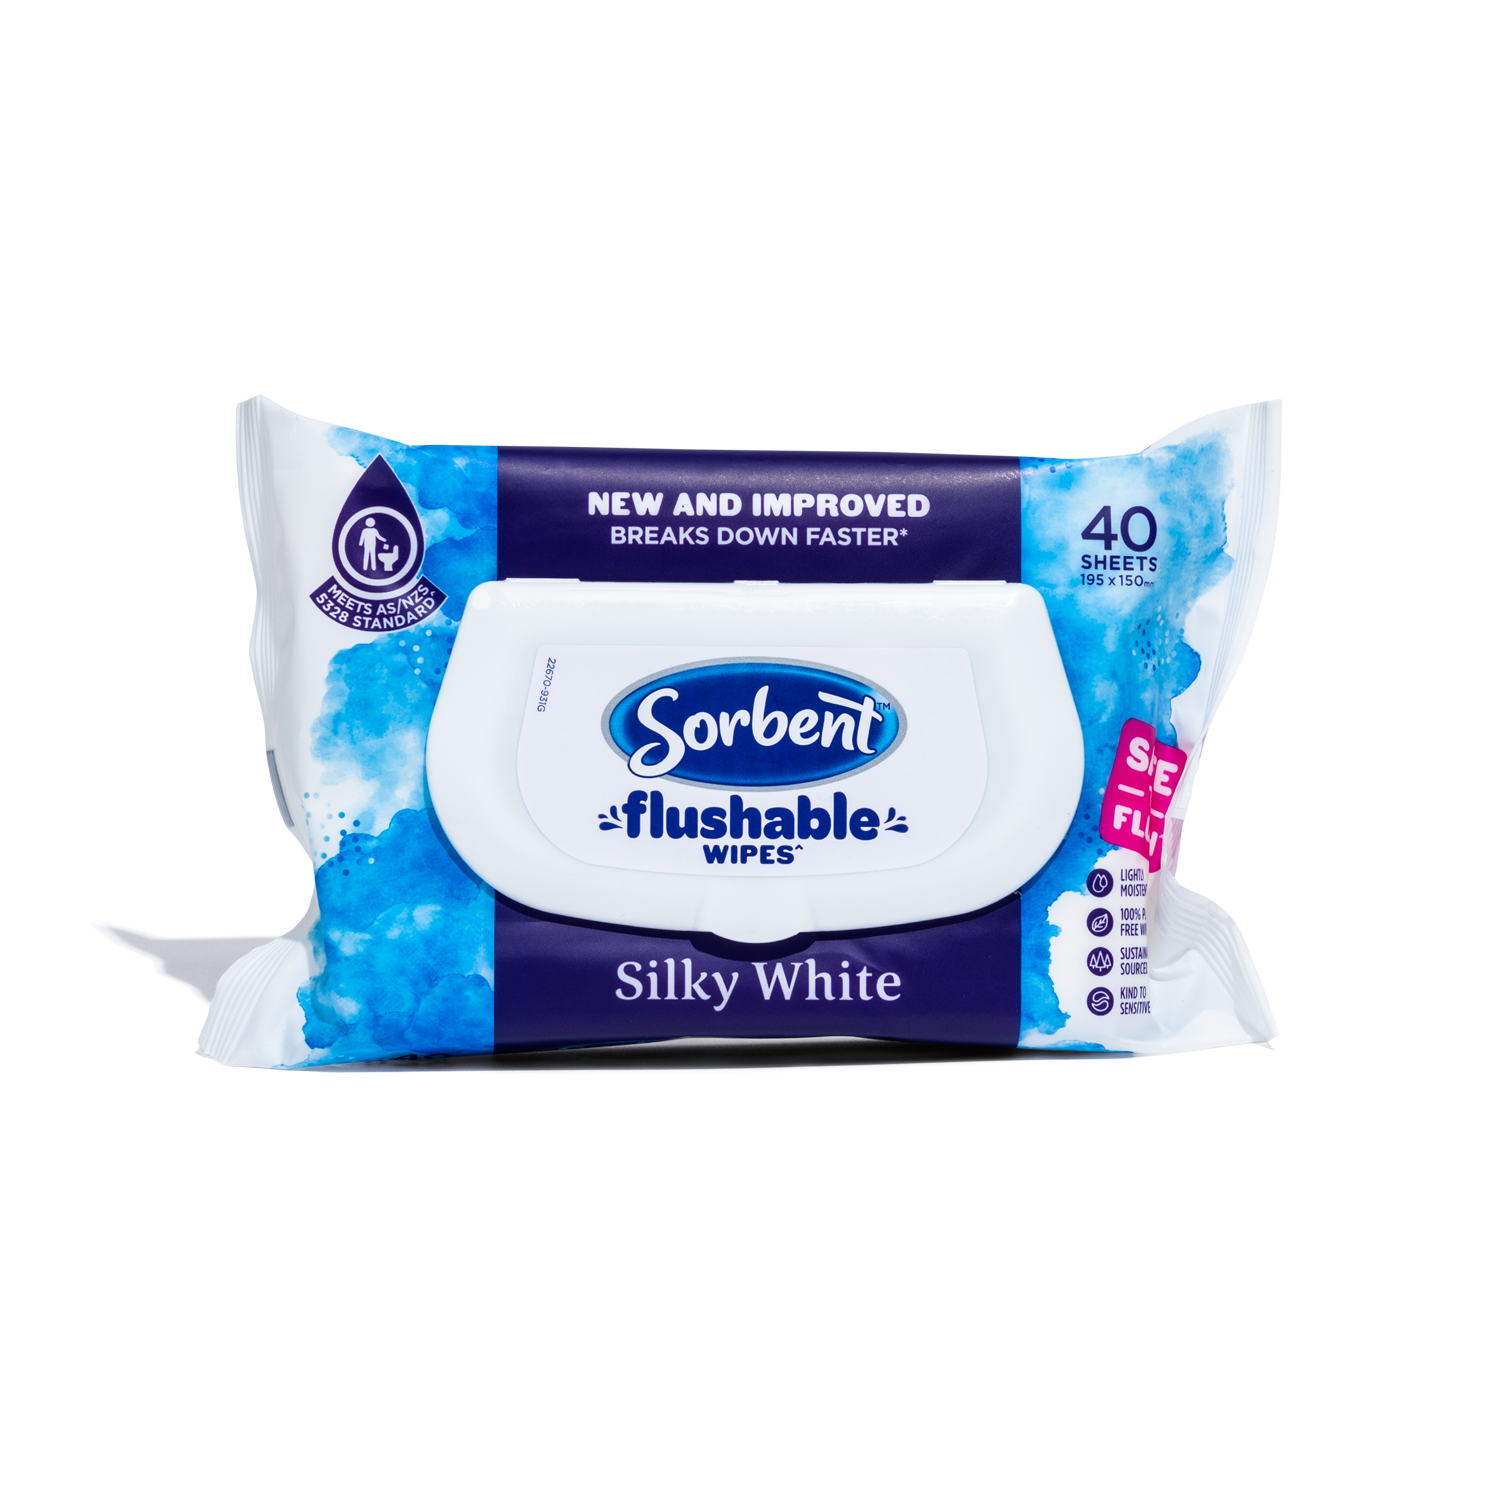 Silky White Flushable Wipes